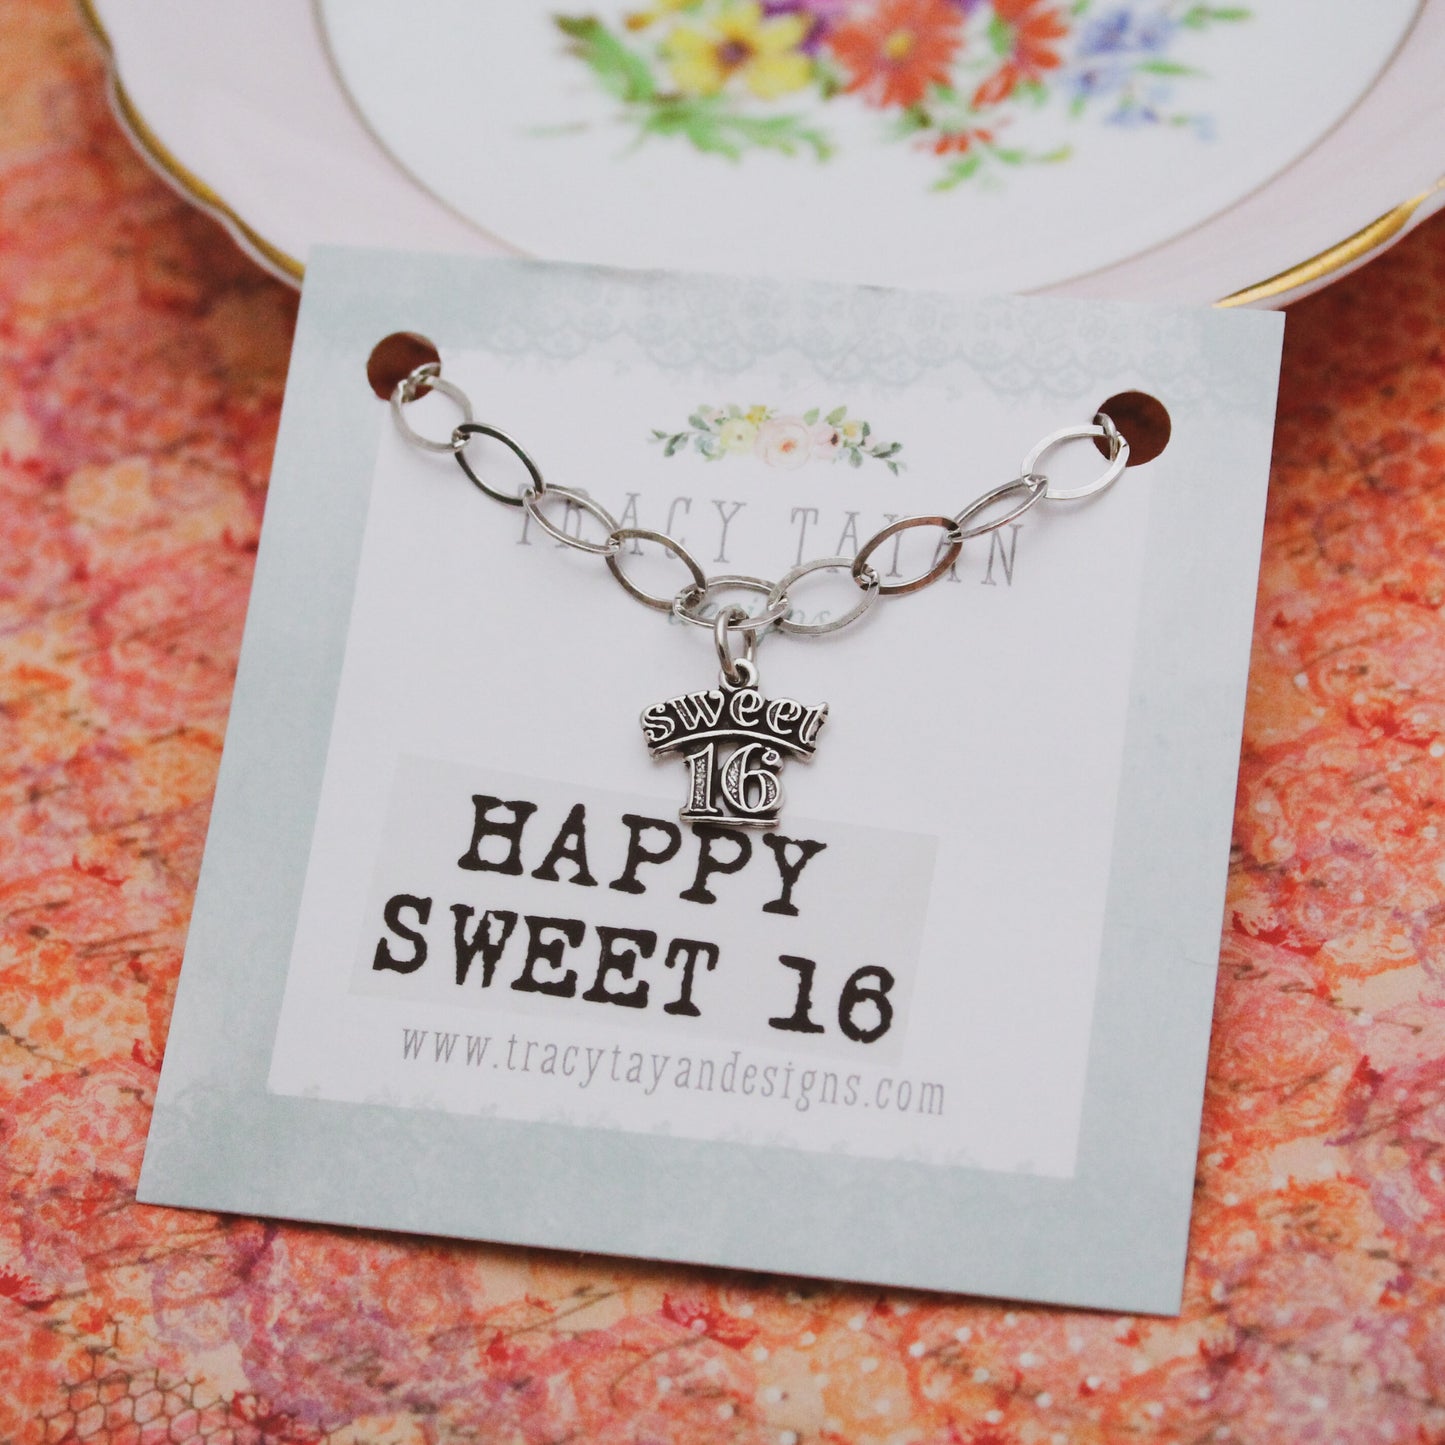 Sweet 16 Birthday Bracelet, Happy Sweet Sixteen Bracelet, Sterling Silver Chain Bracelet, Birthday Gift for Her, Cute Unique Sweet 16 Gift